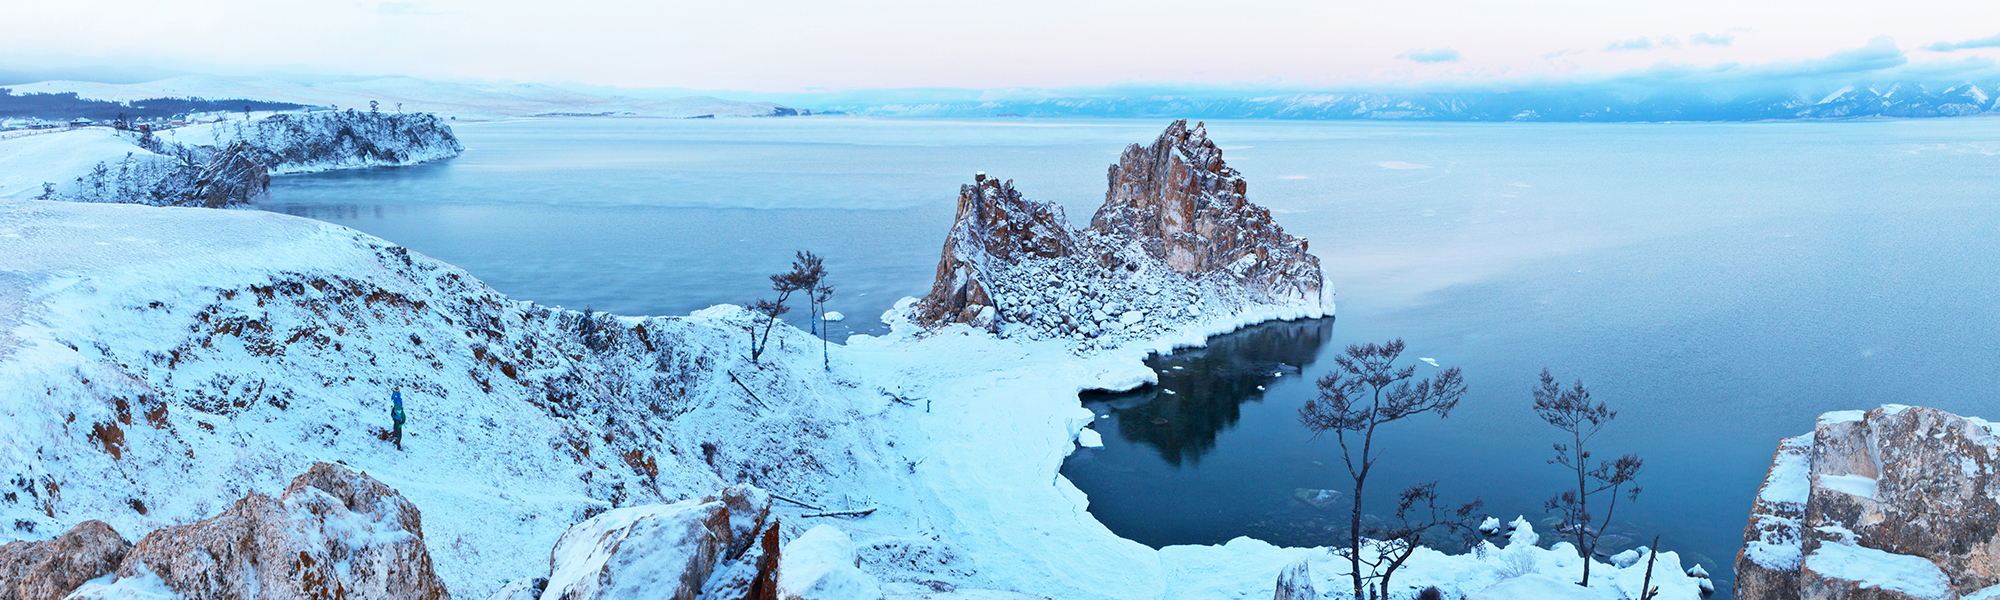 Voyage sur mesure Lac Baïkal © Zhaubasar / iStock